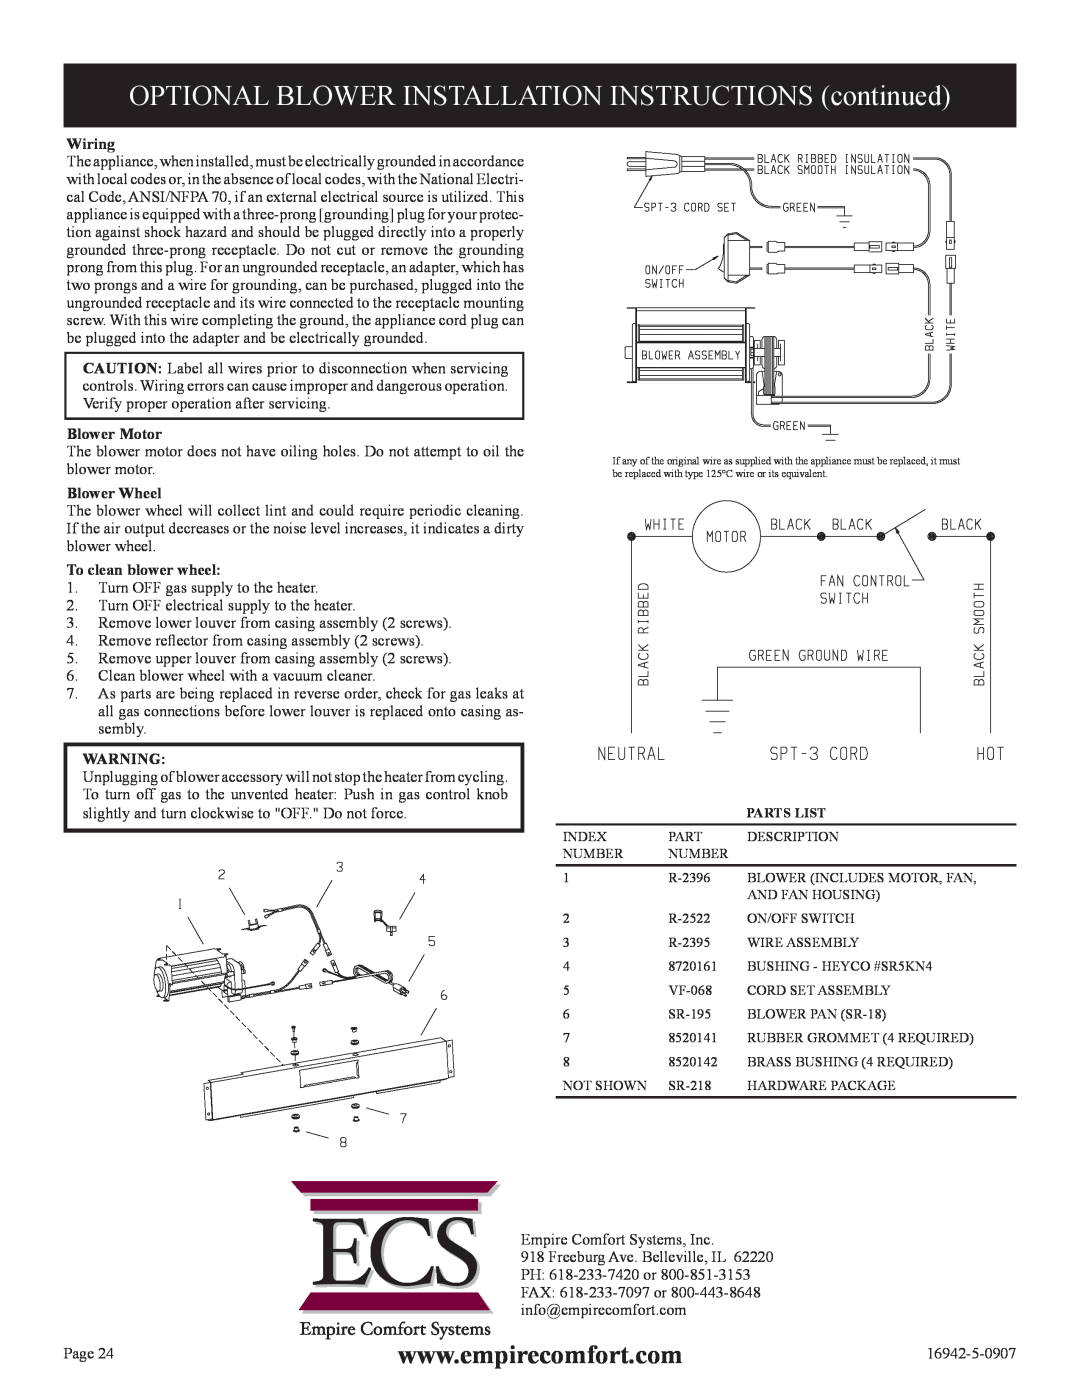 Empire Comfort Systems SR-30 installation instructions Wiring, Blower Motor, Blower Wheel, To clean blower wheel 